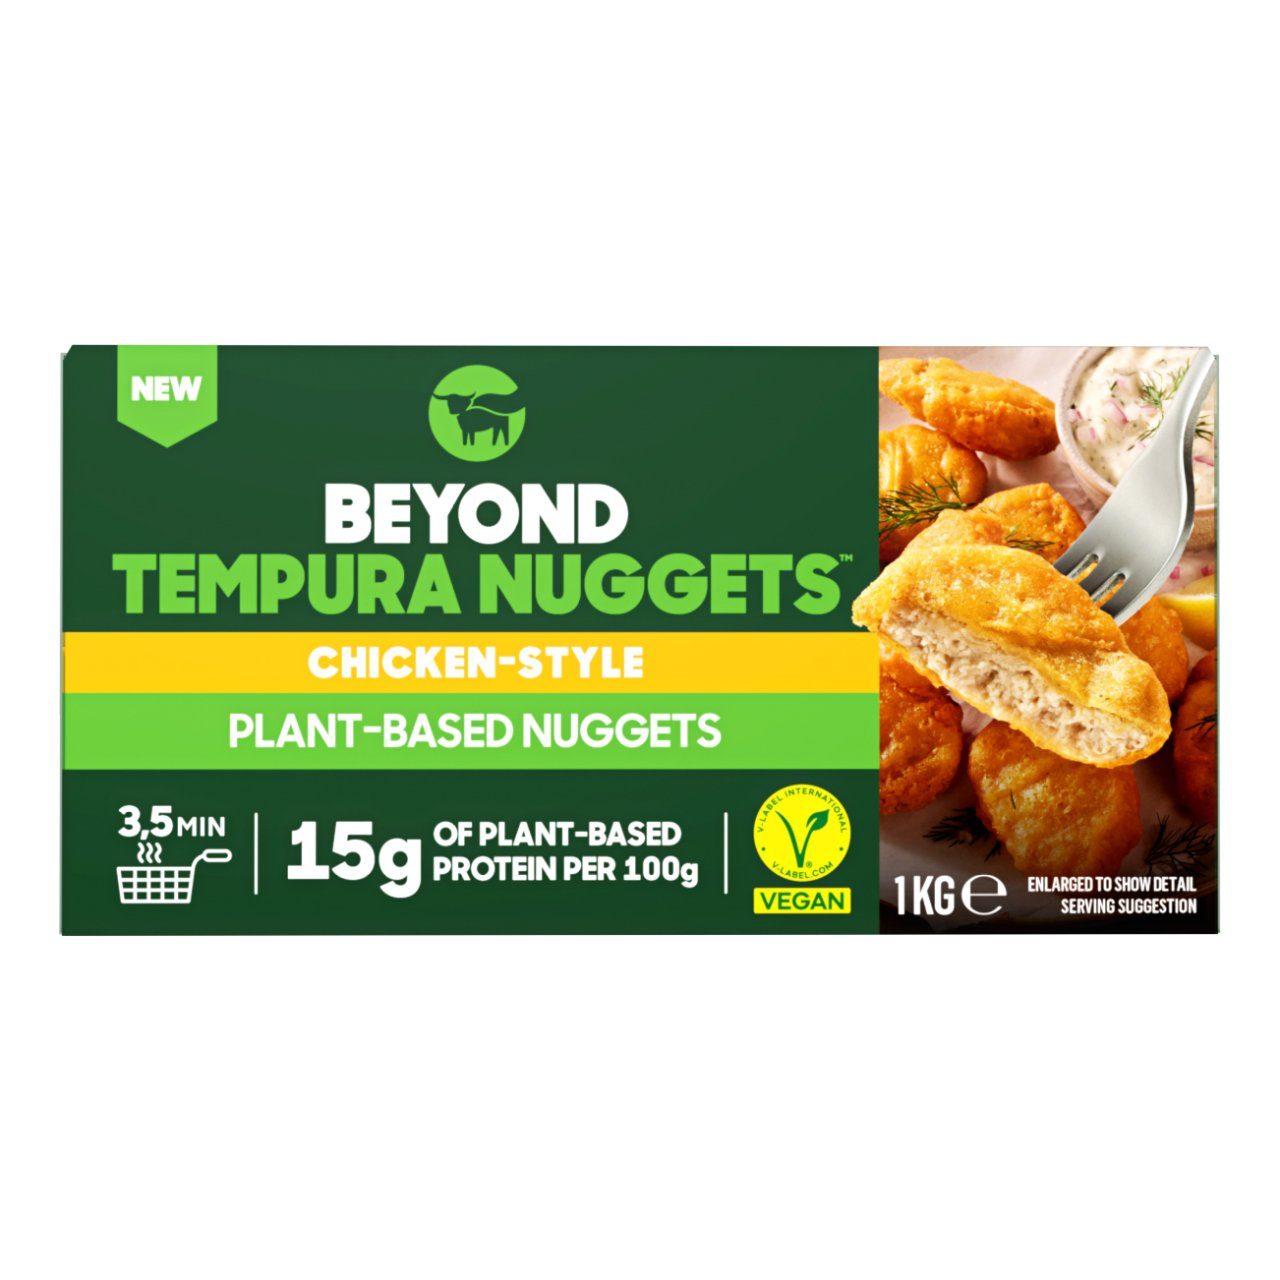 Chicken tempura nuggets